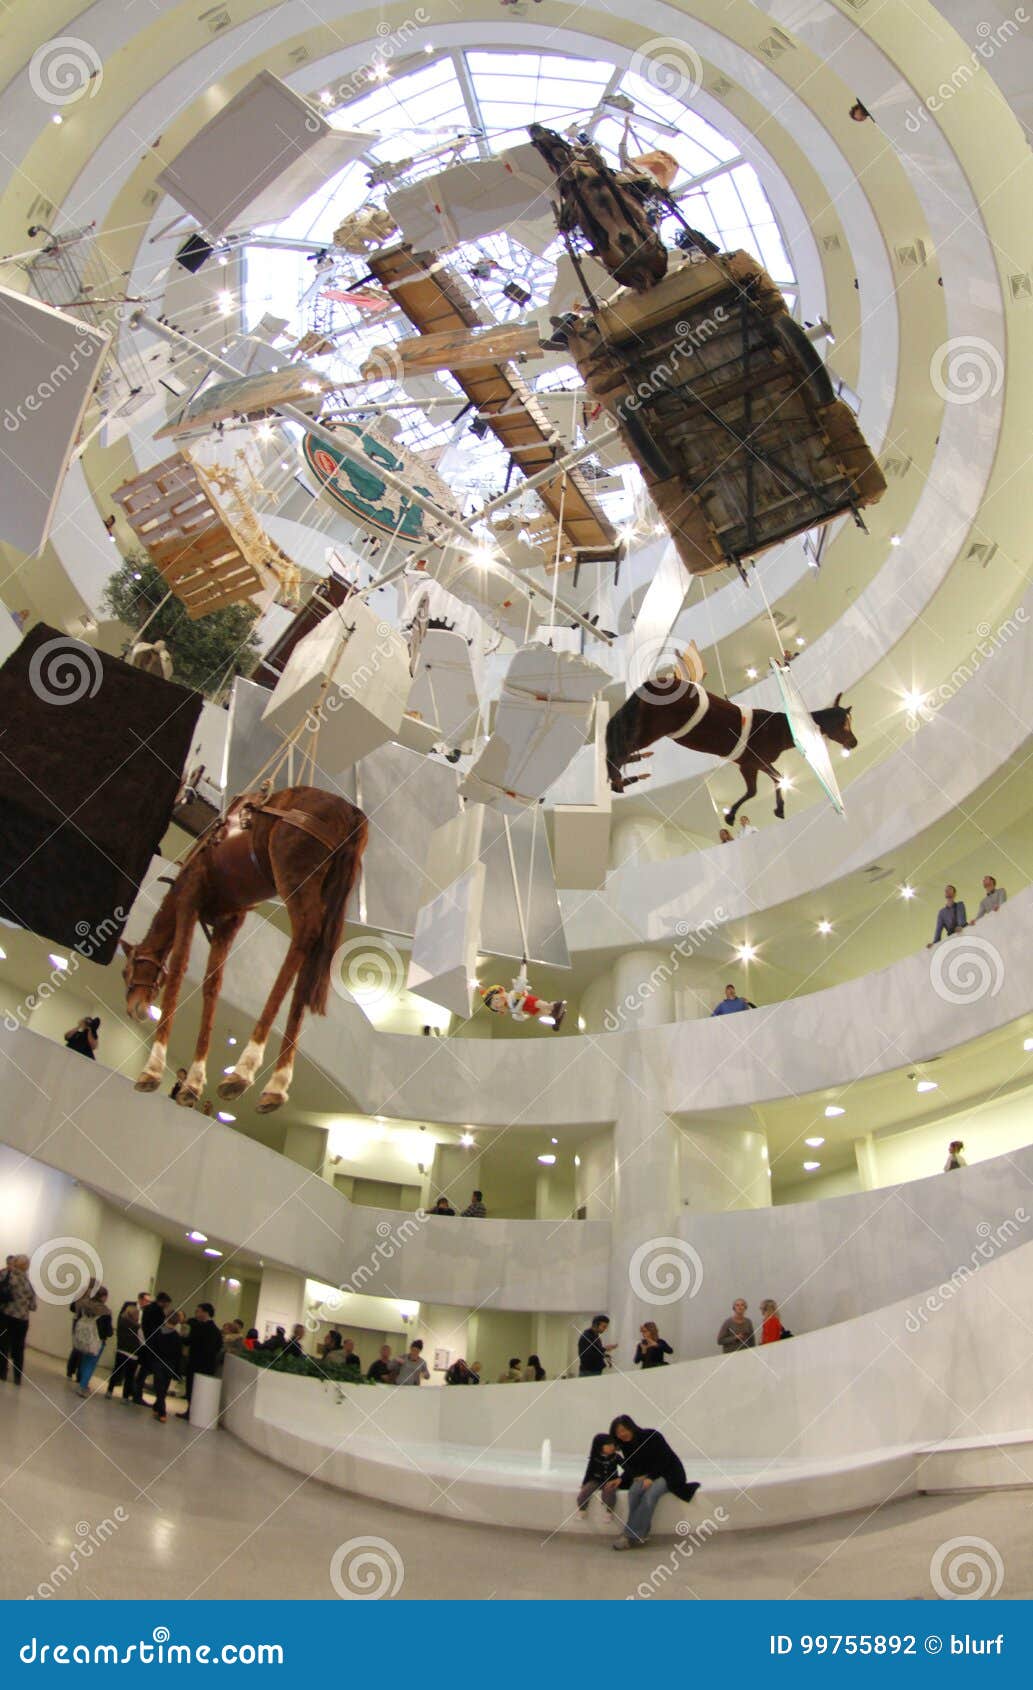 Guggenheim Museum Interior With Cattelans Artwork Vertical